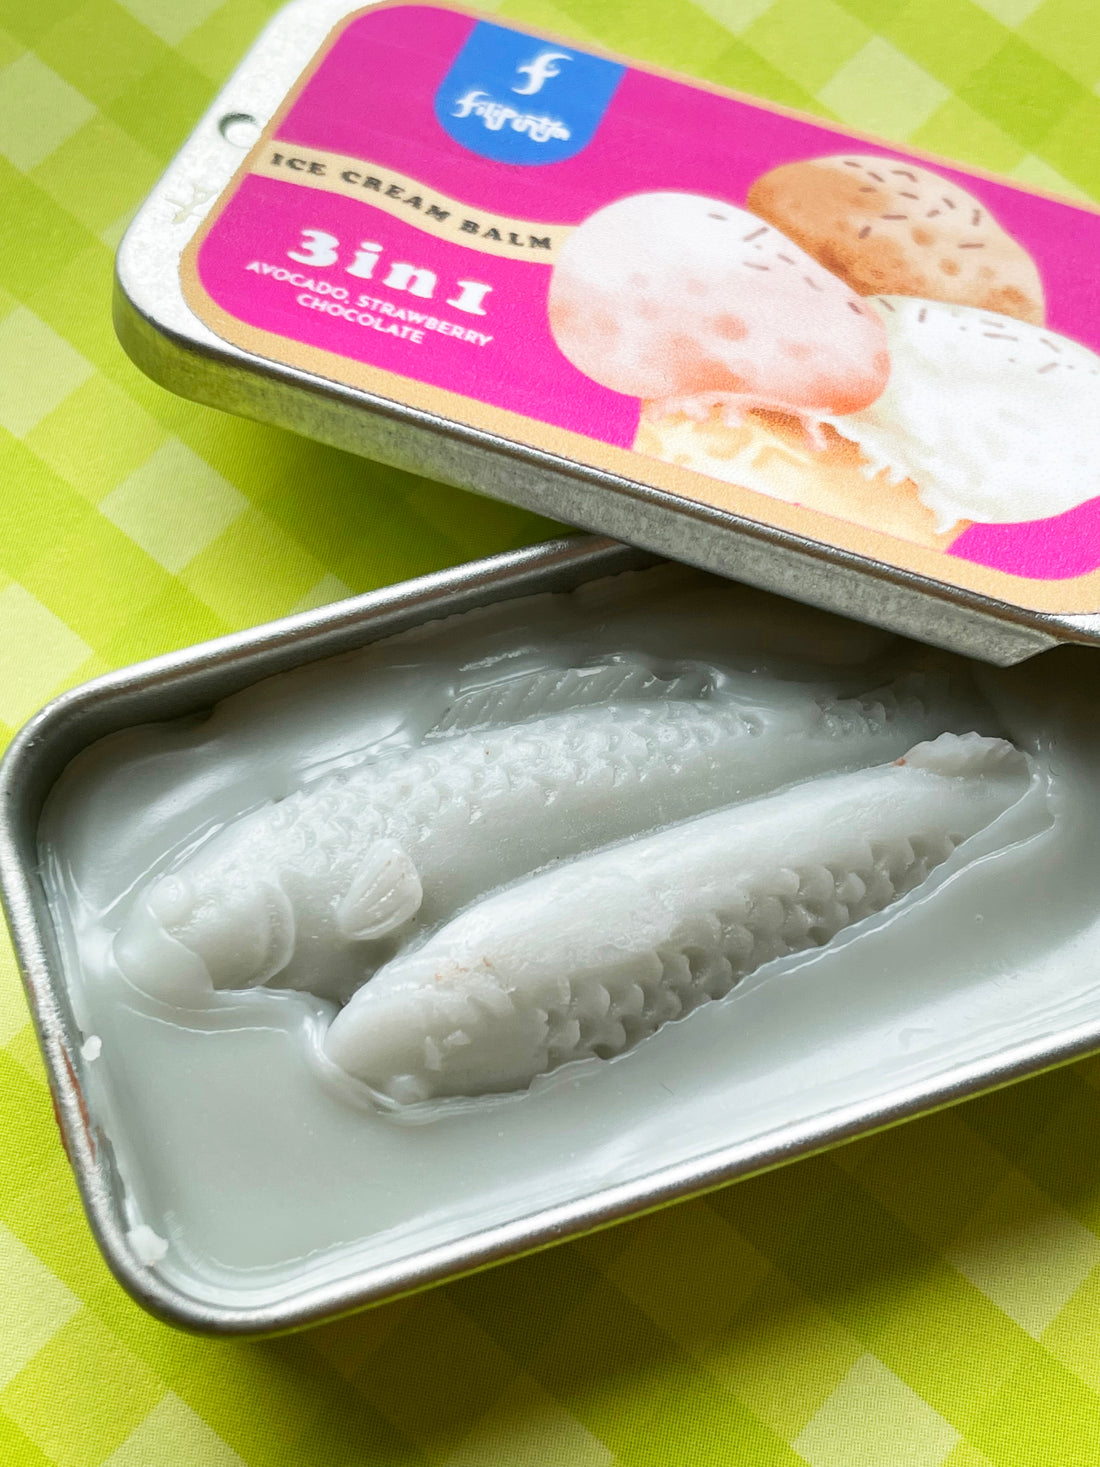 Fish Ice Cream Balm